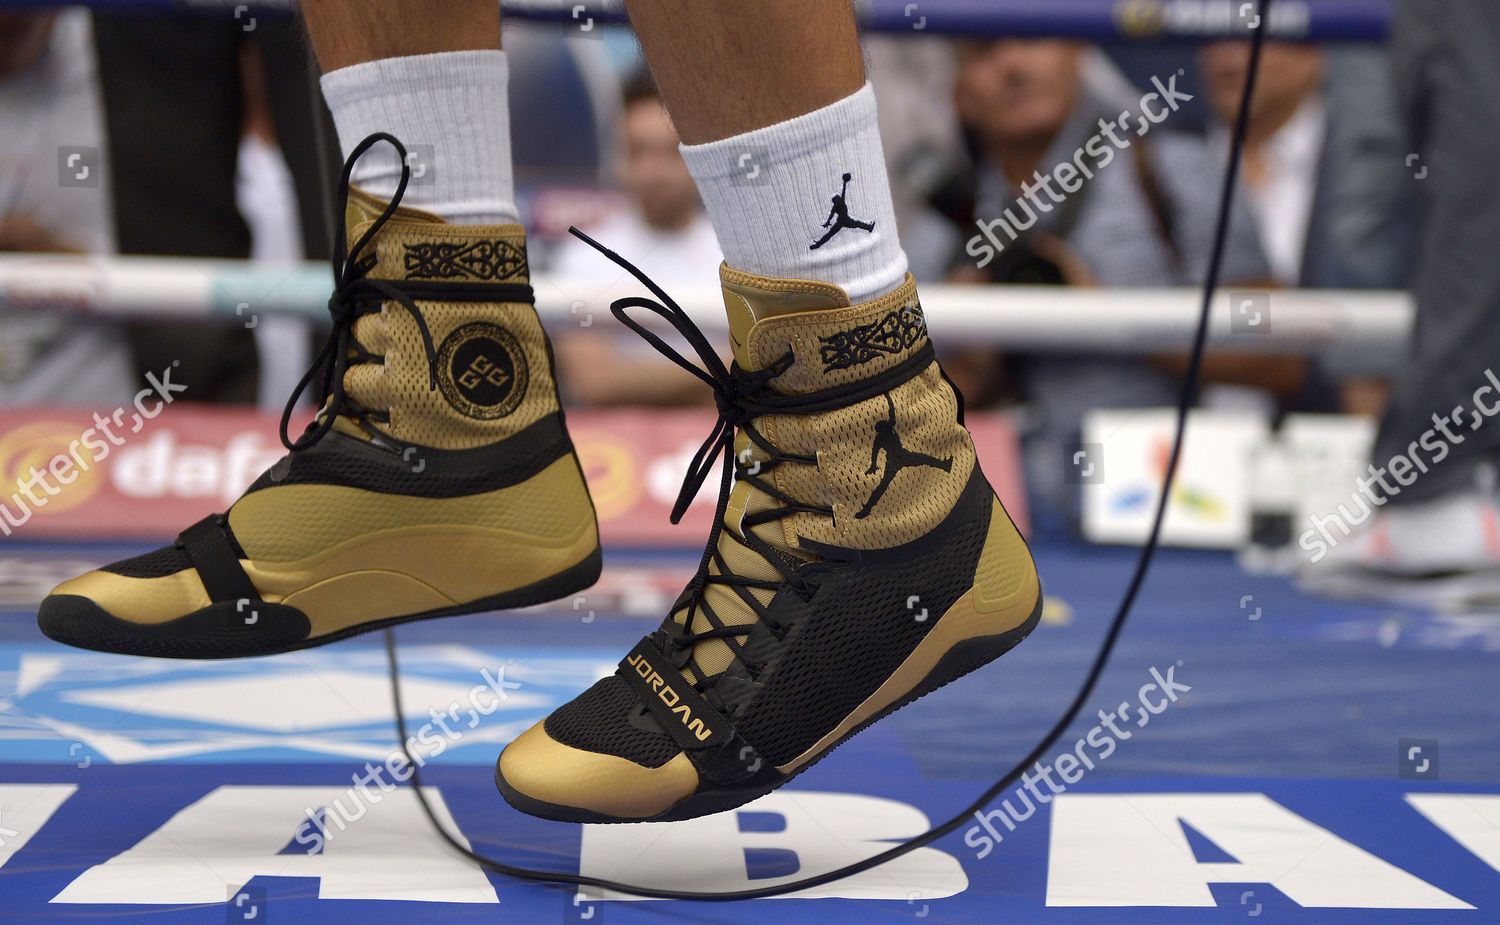 ggg jordan boxing shoes